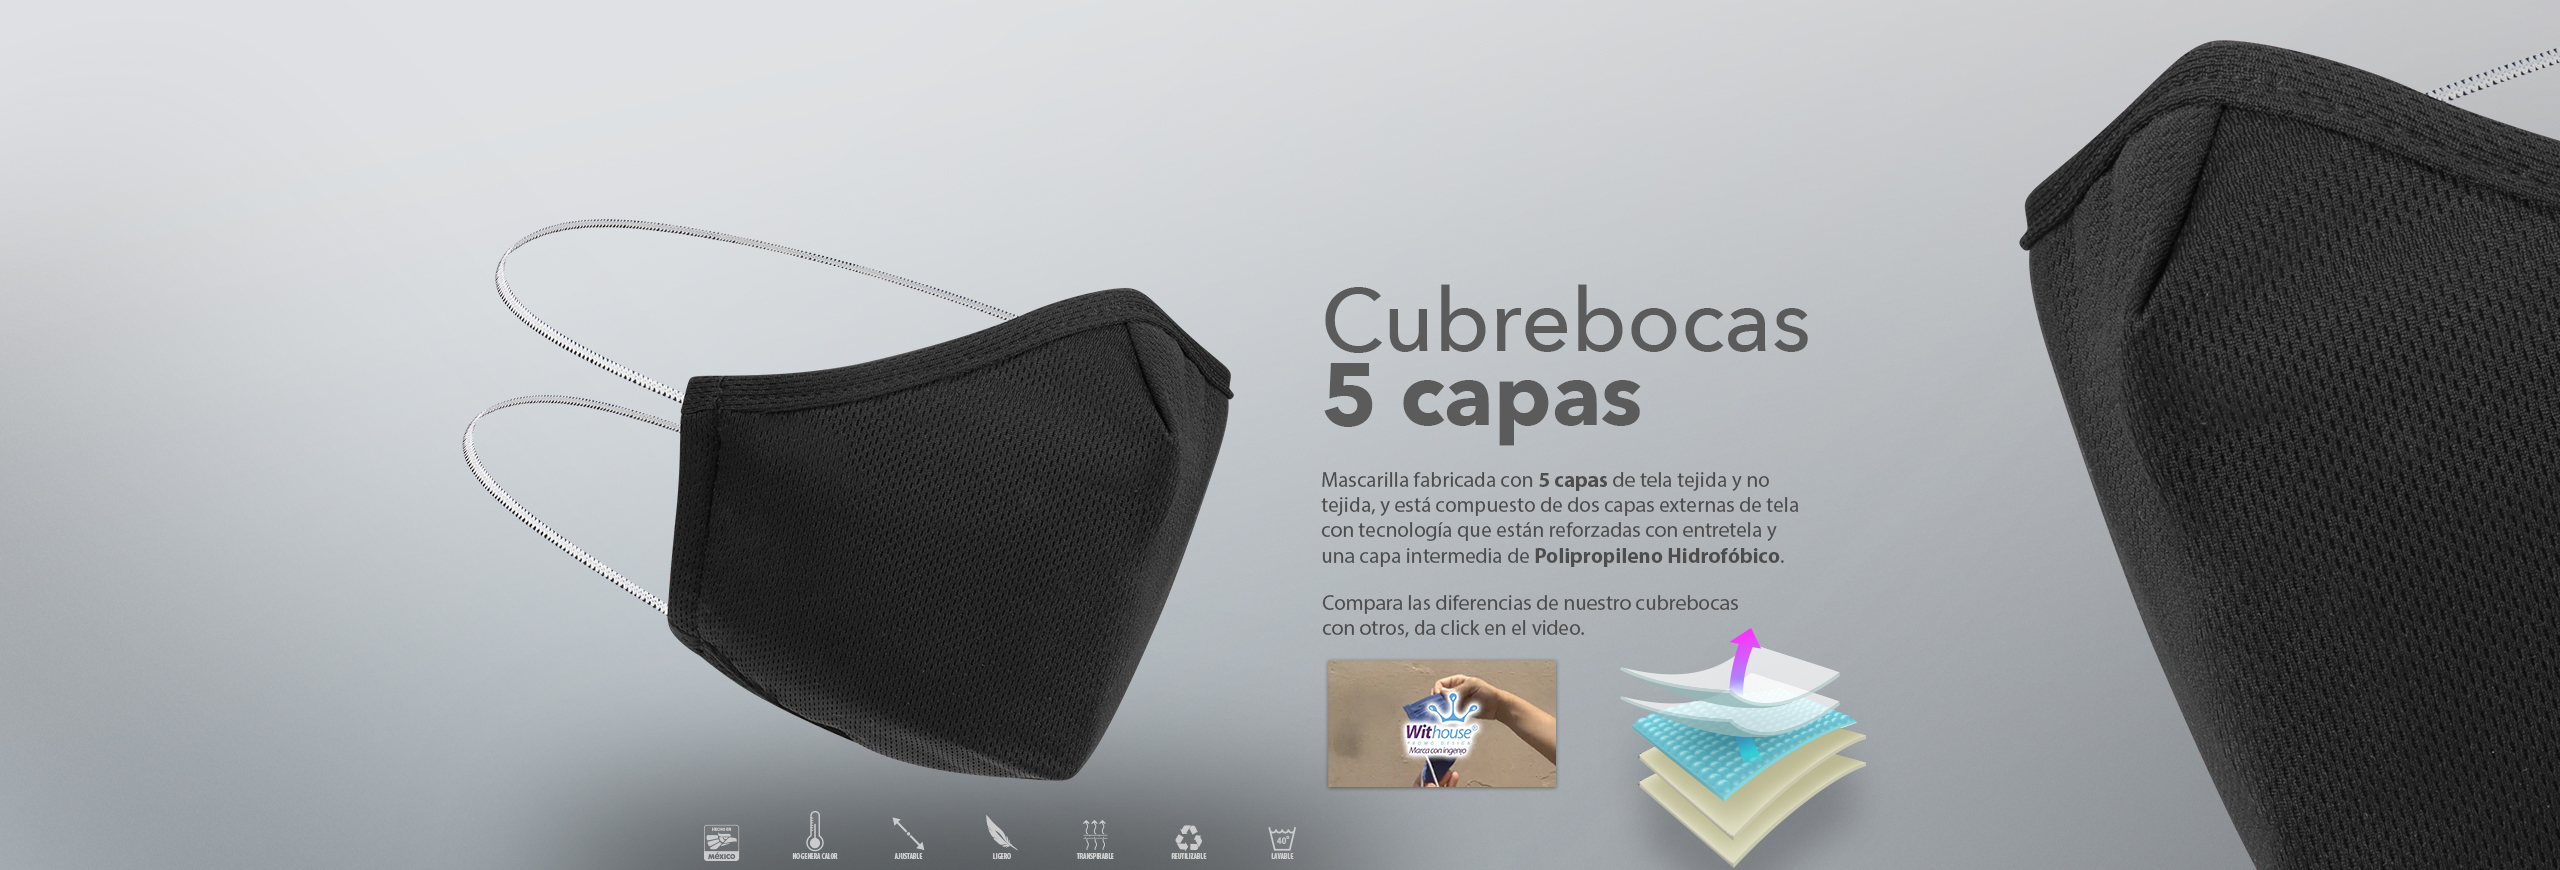 Banners-Cubrebocas-5-capas-Web-Site-Inicio